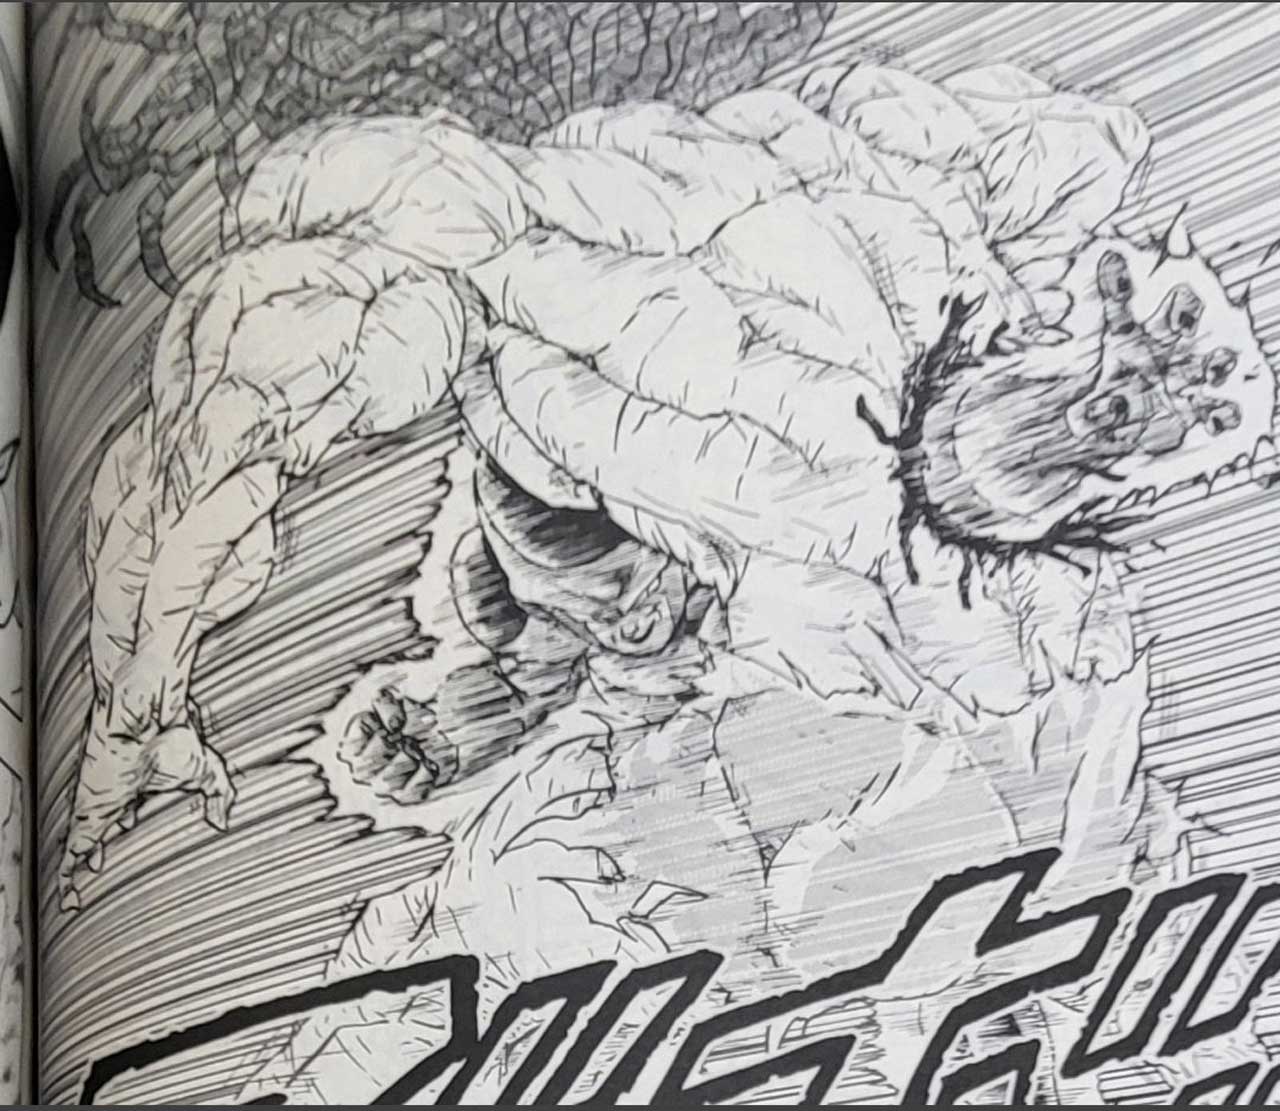 Dragon ball super manga 87 spoiler 04